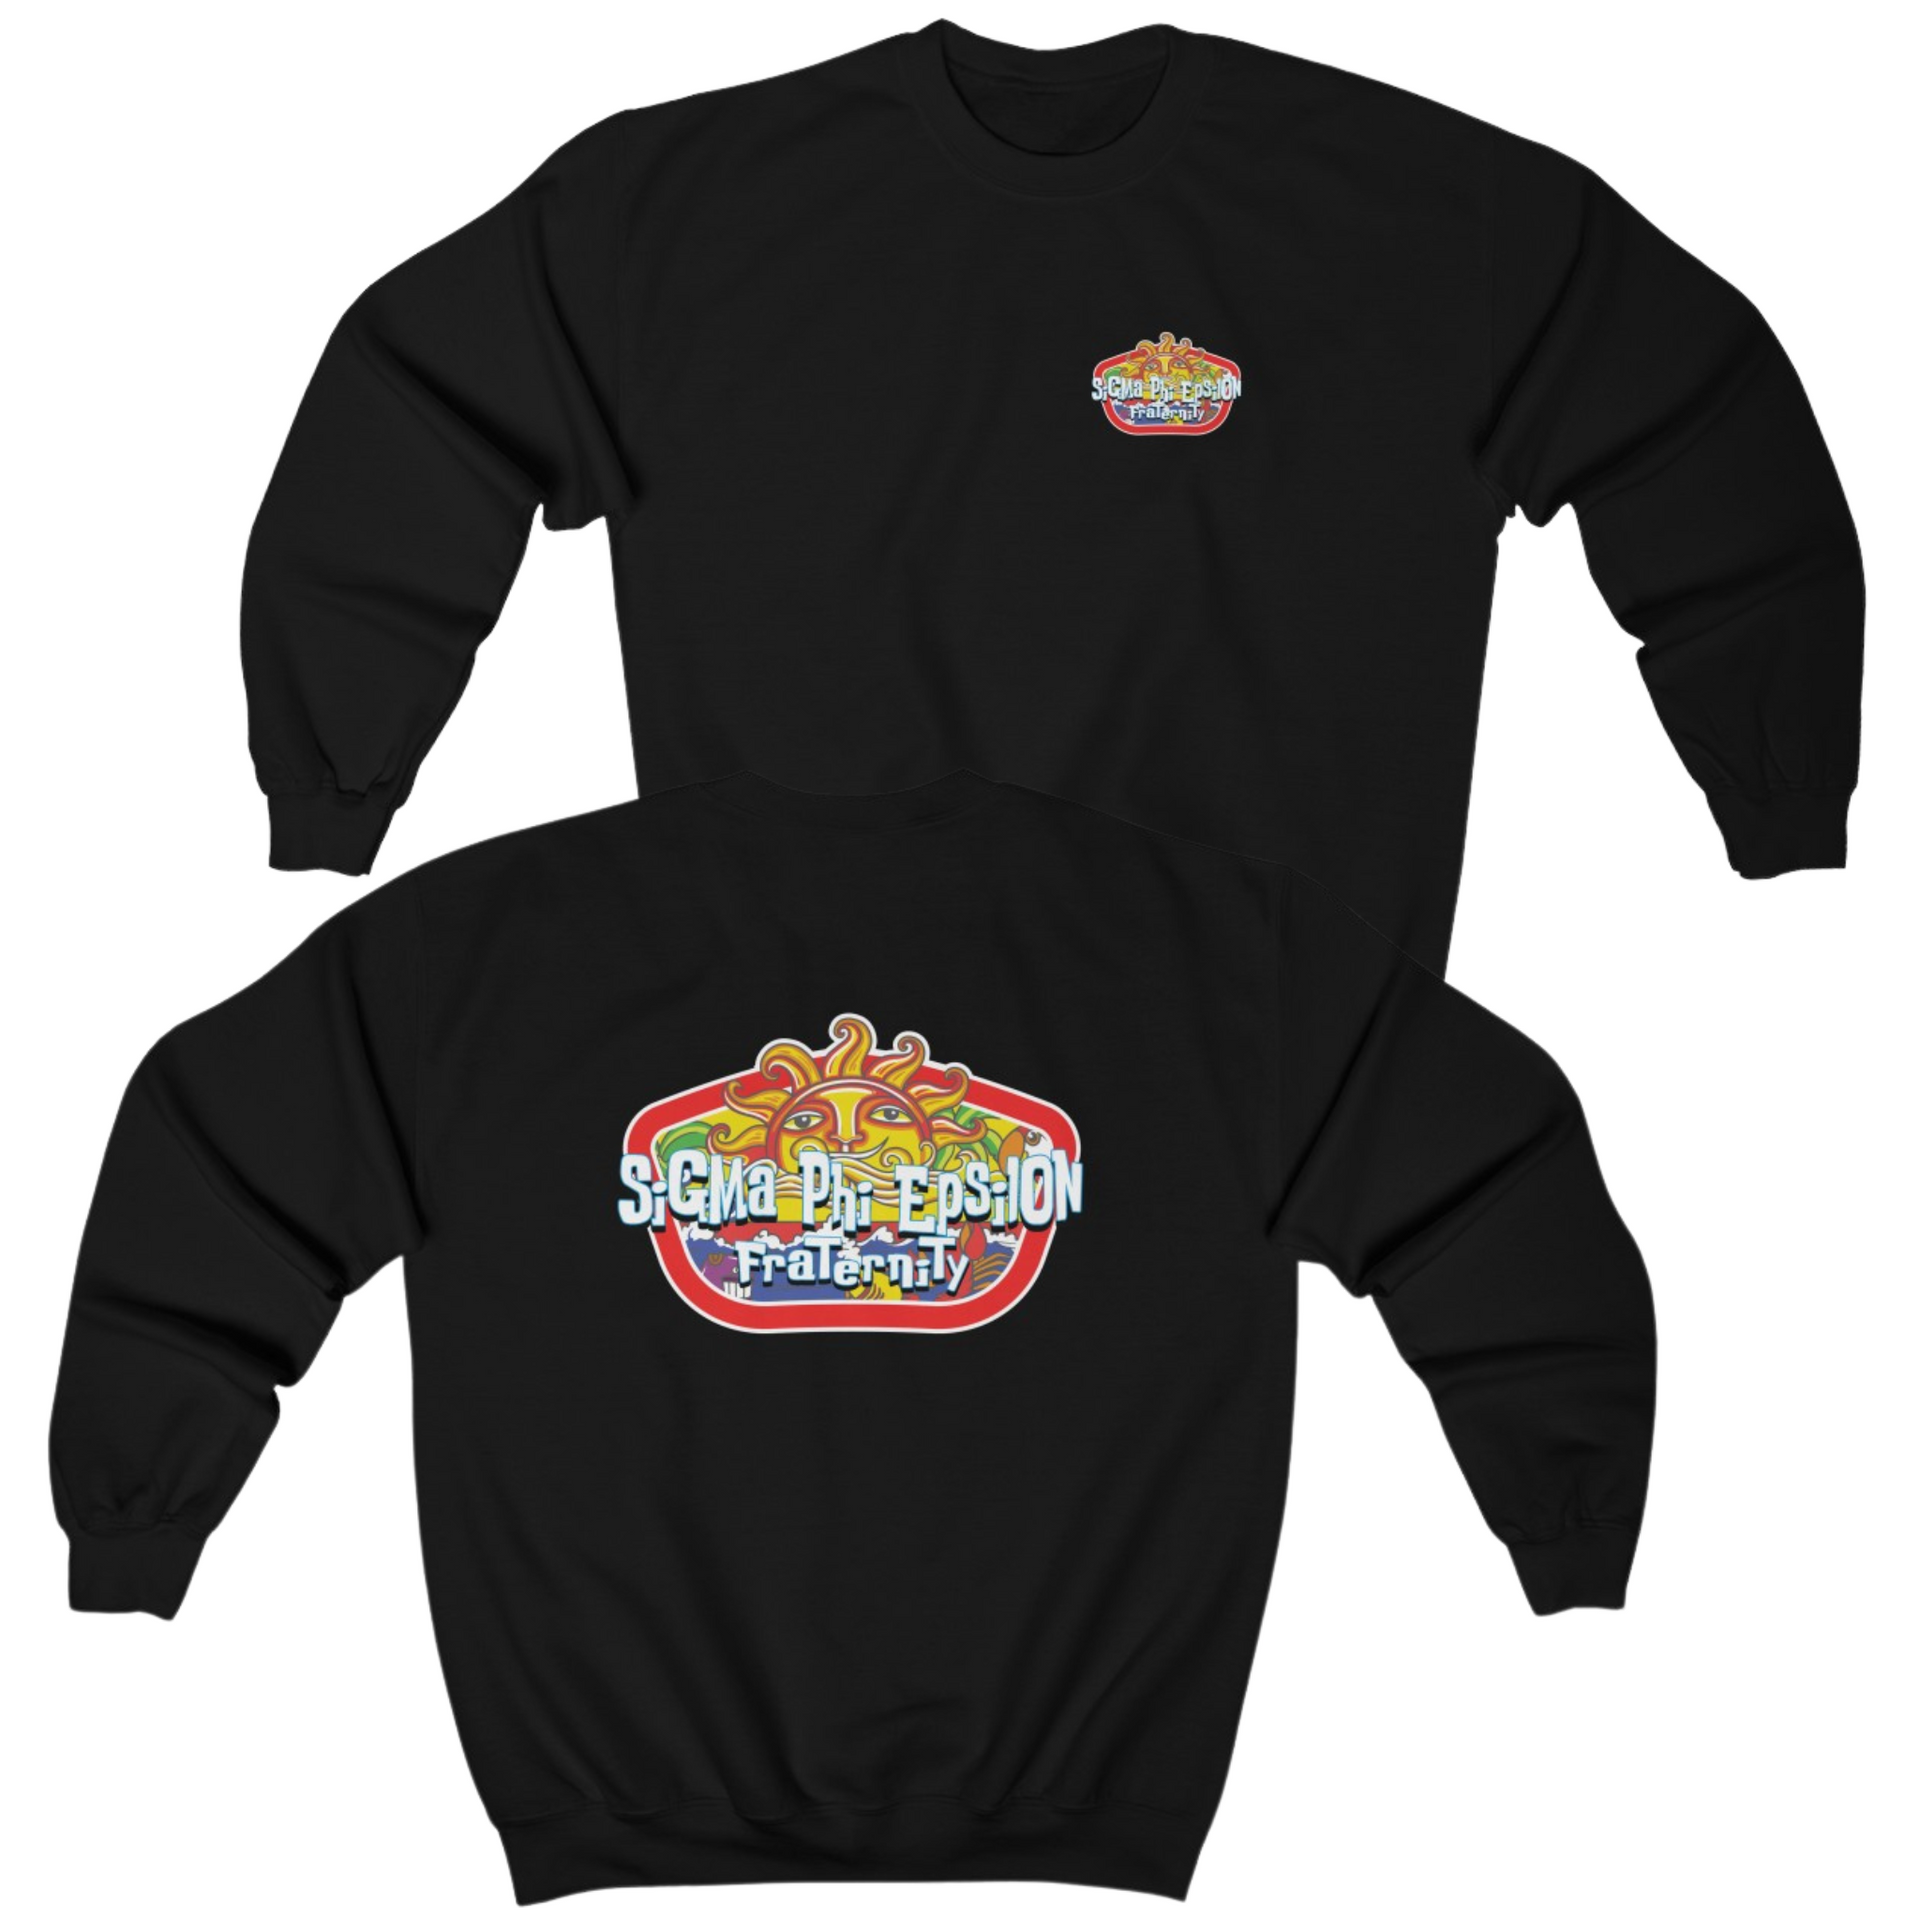 Black Sigma Phi Epsilon Graphic Crewneck Sweatshirt | Summer Sol | SigEp Fraternity Clothes and Merchandise